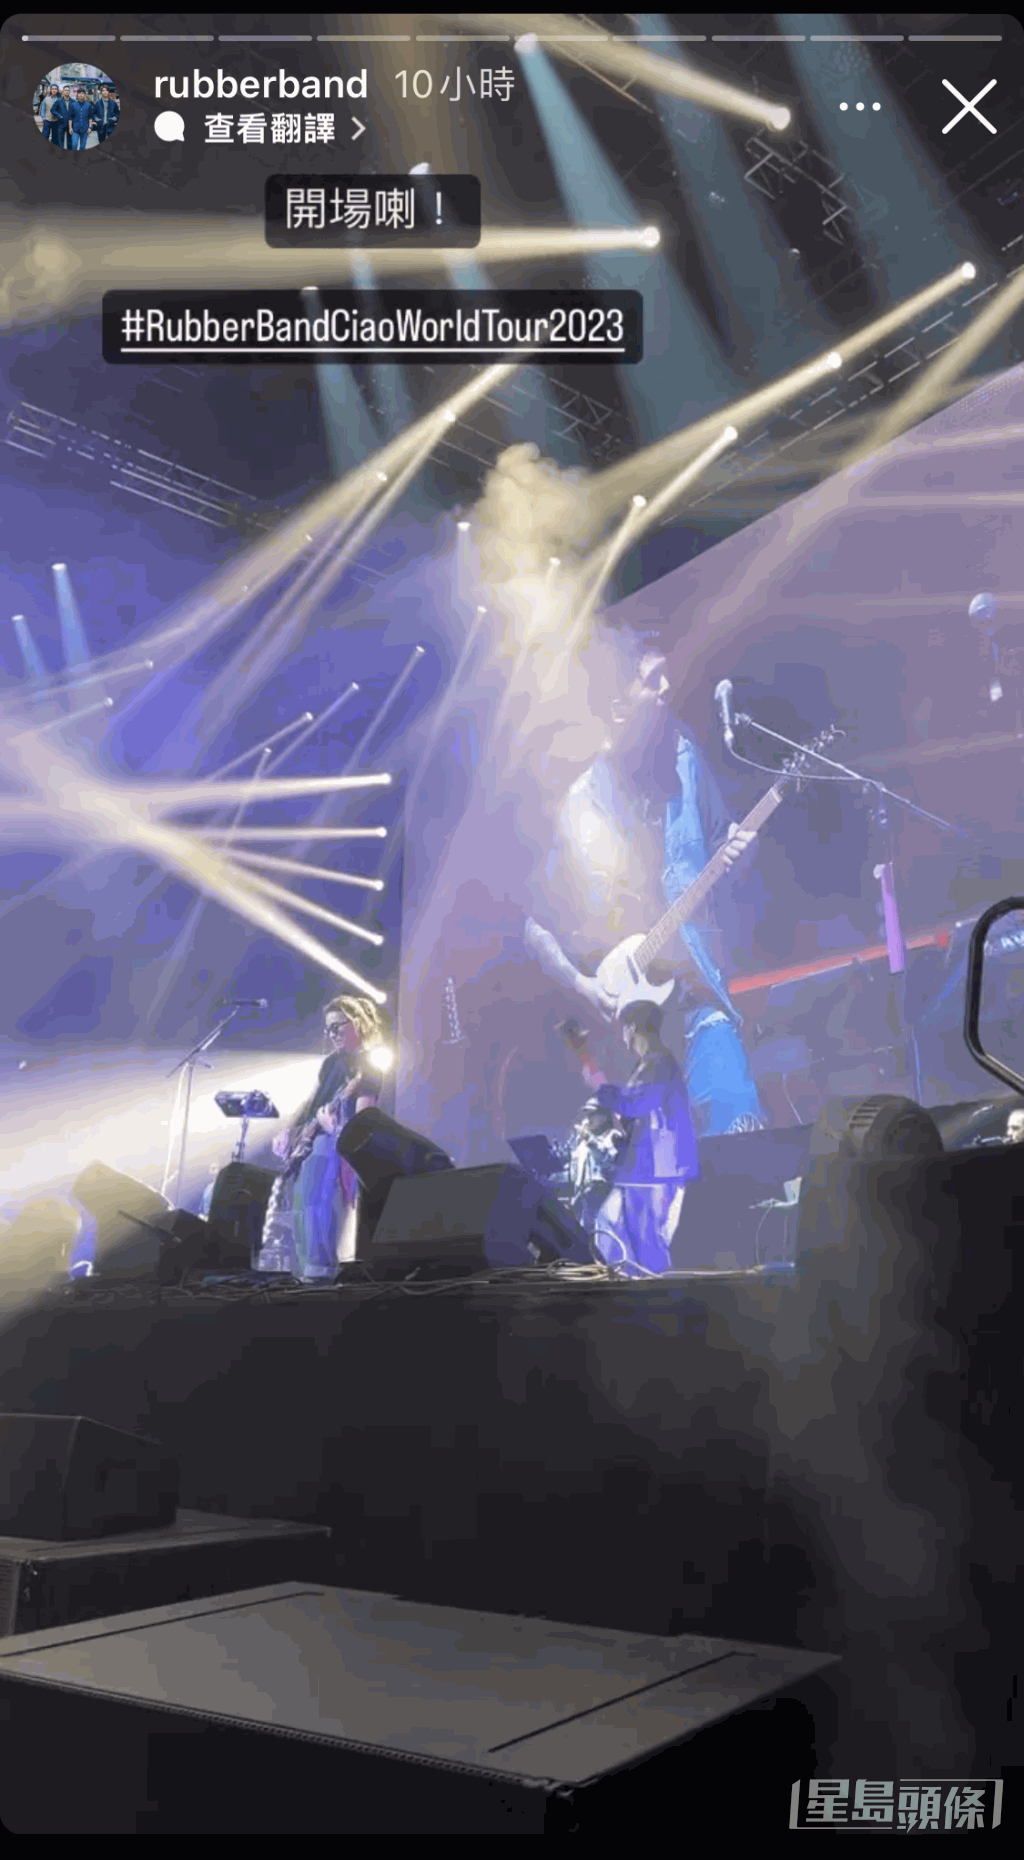 RubberBand昨晚在伦敦举行演唱会，之后会到英国曼彻斯特、德国及荷兰继续开骚。